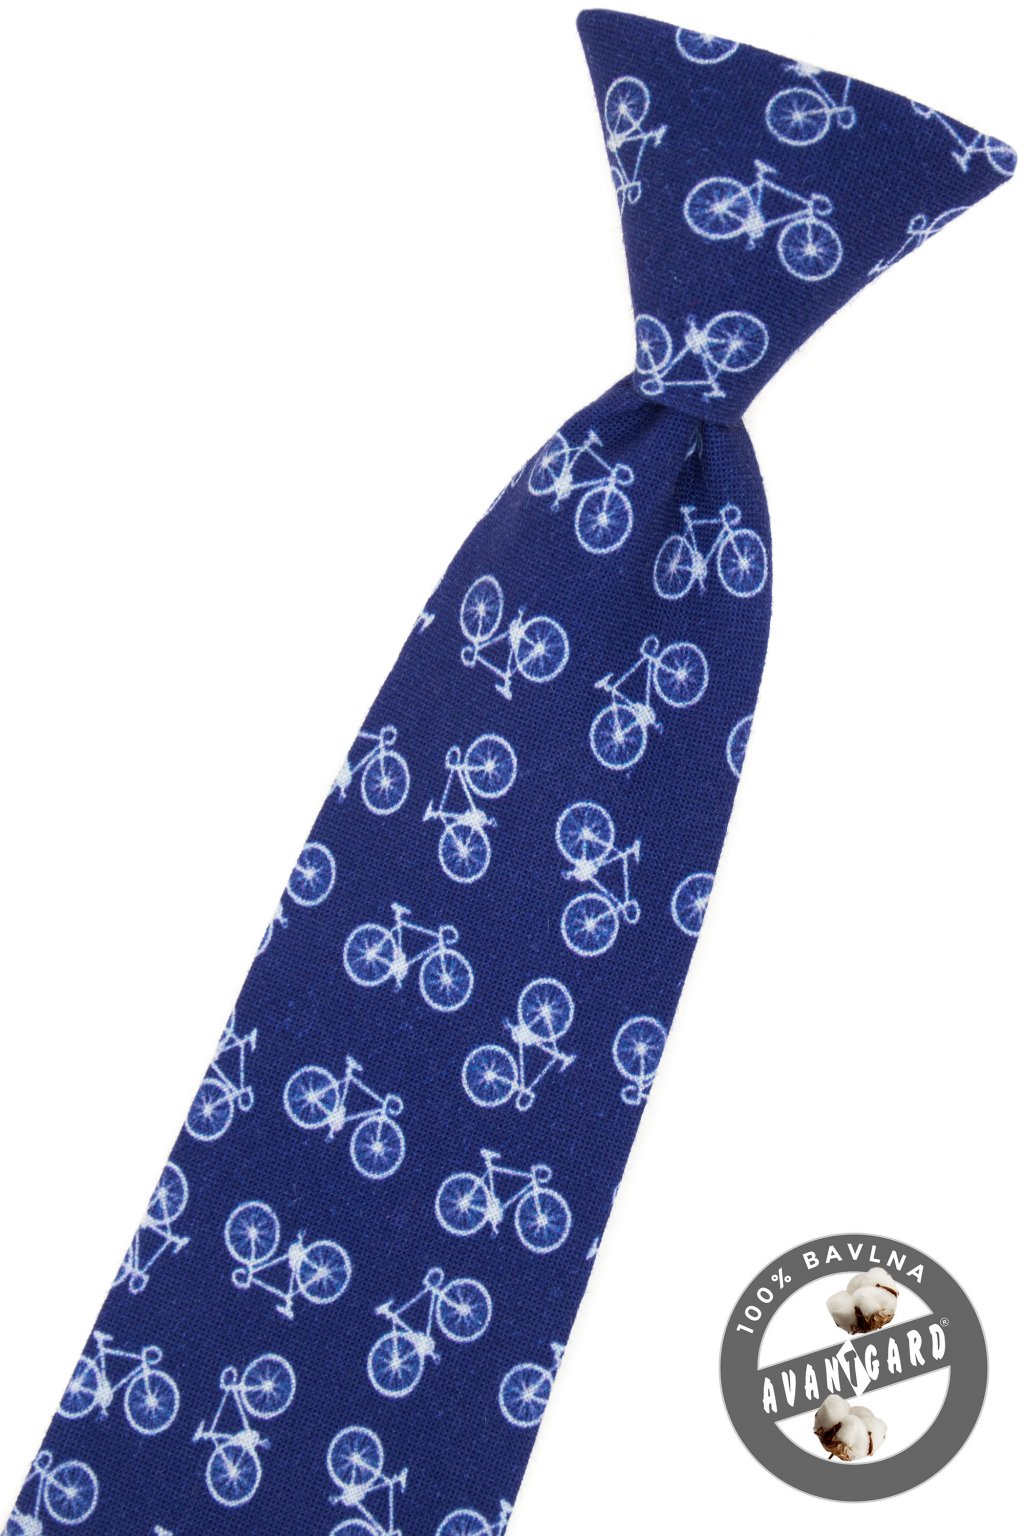 Chlapecká kravata modrá/cyklistika 548 - 250